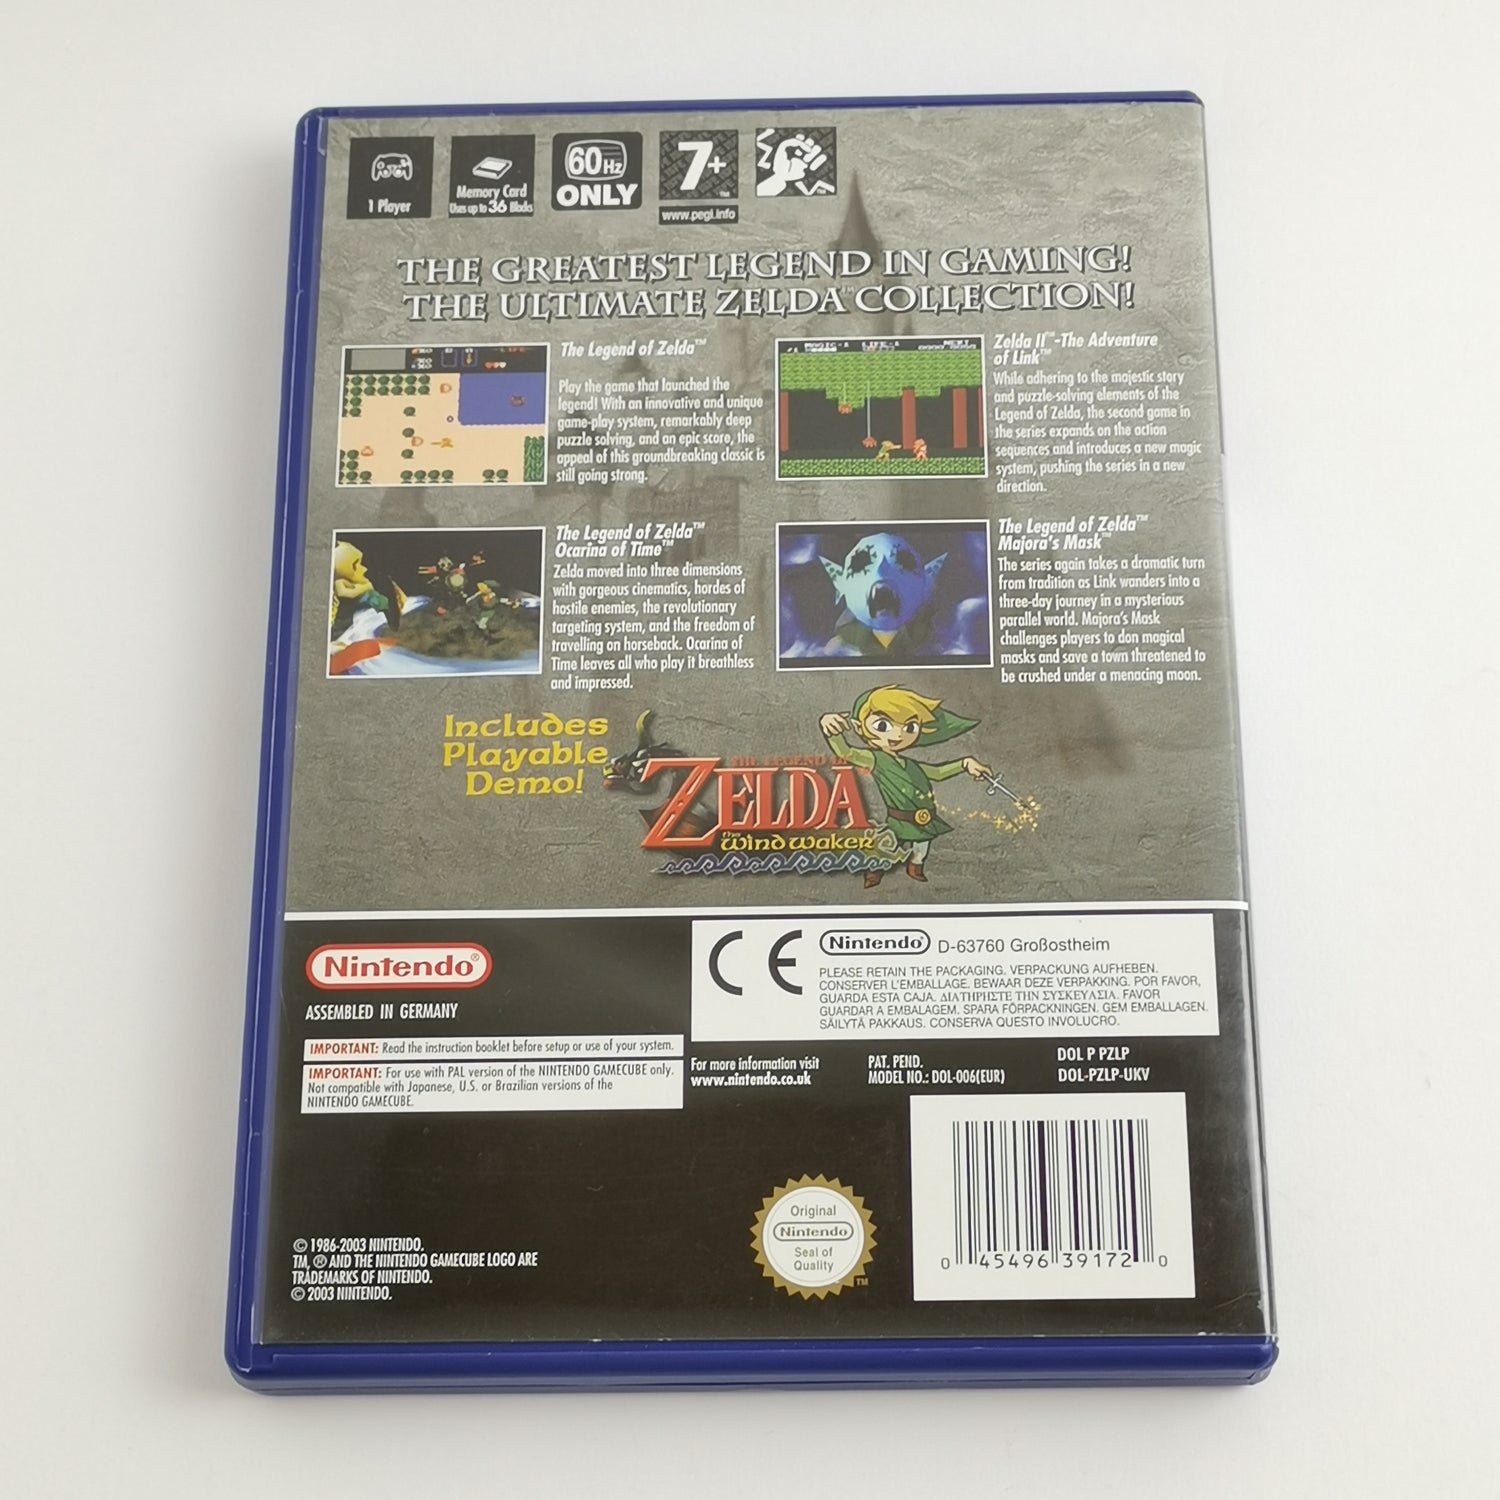 Nintendo Gamecube game: The Legend of Zelda Collectors Edition - original packaging instructions